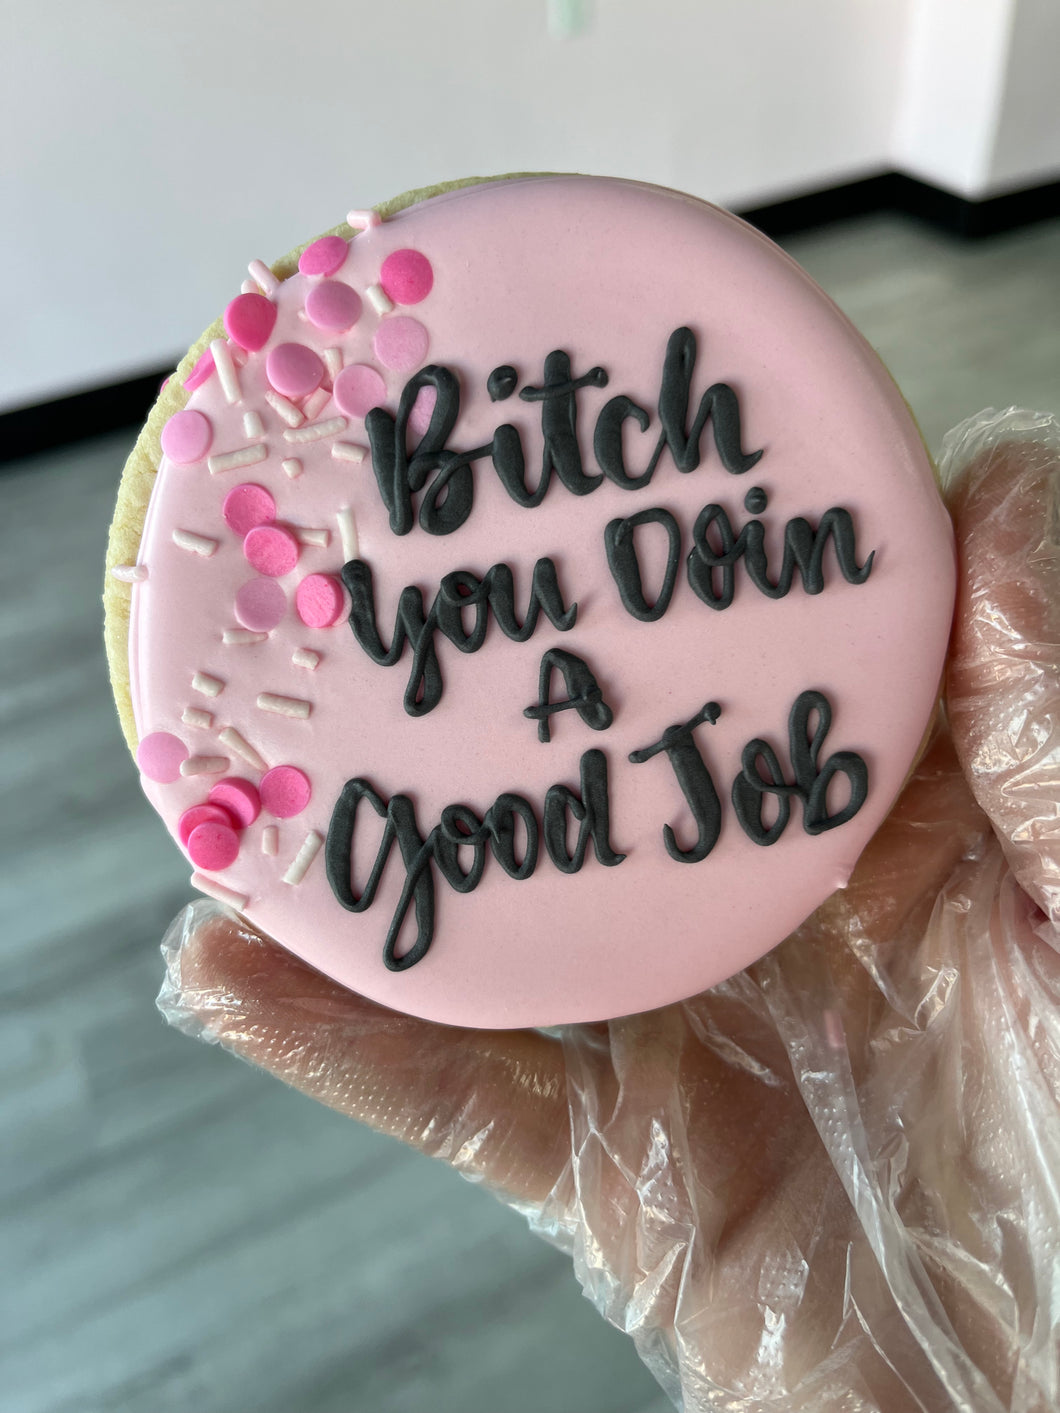 Bitch you doin a good job Cookie